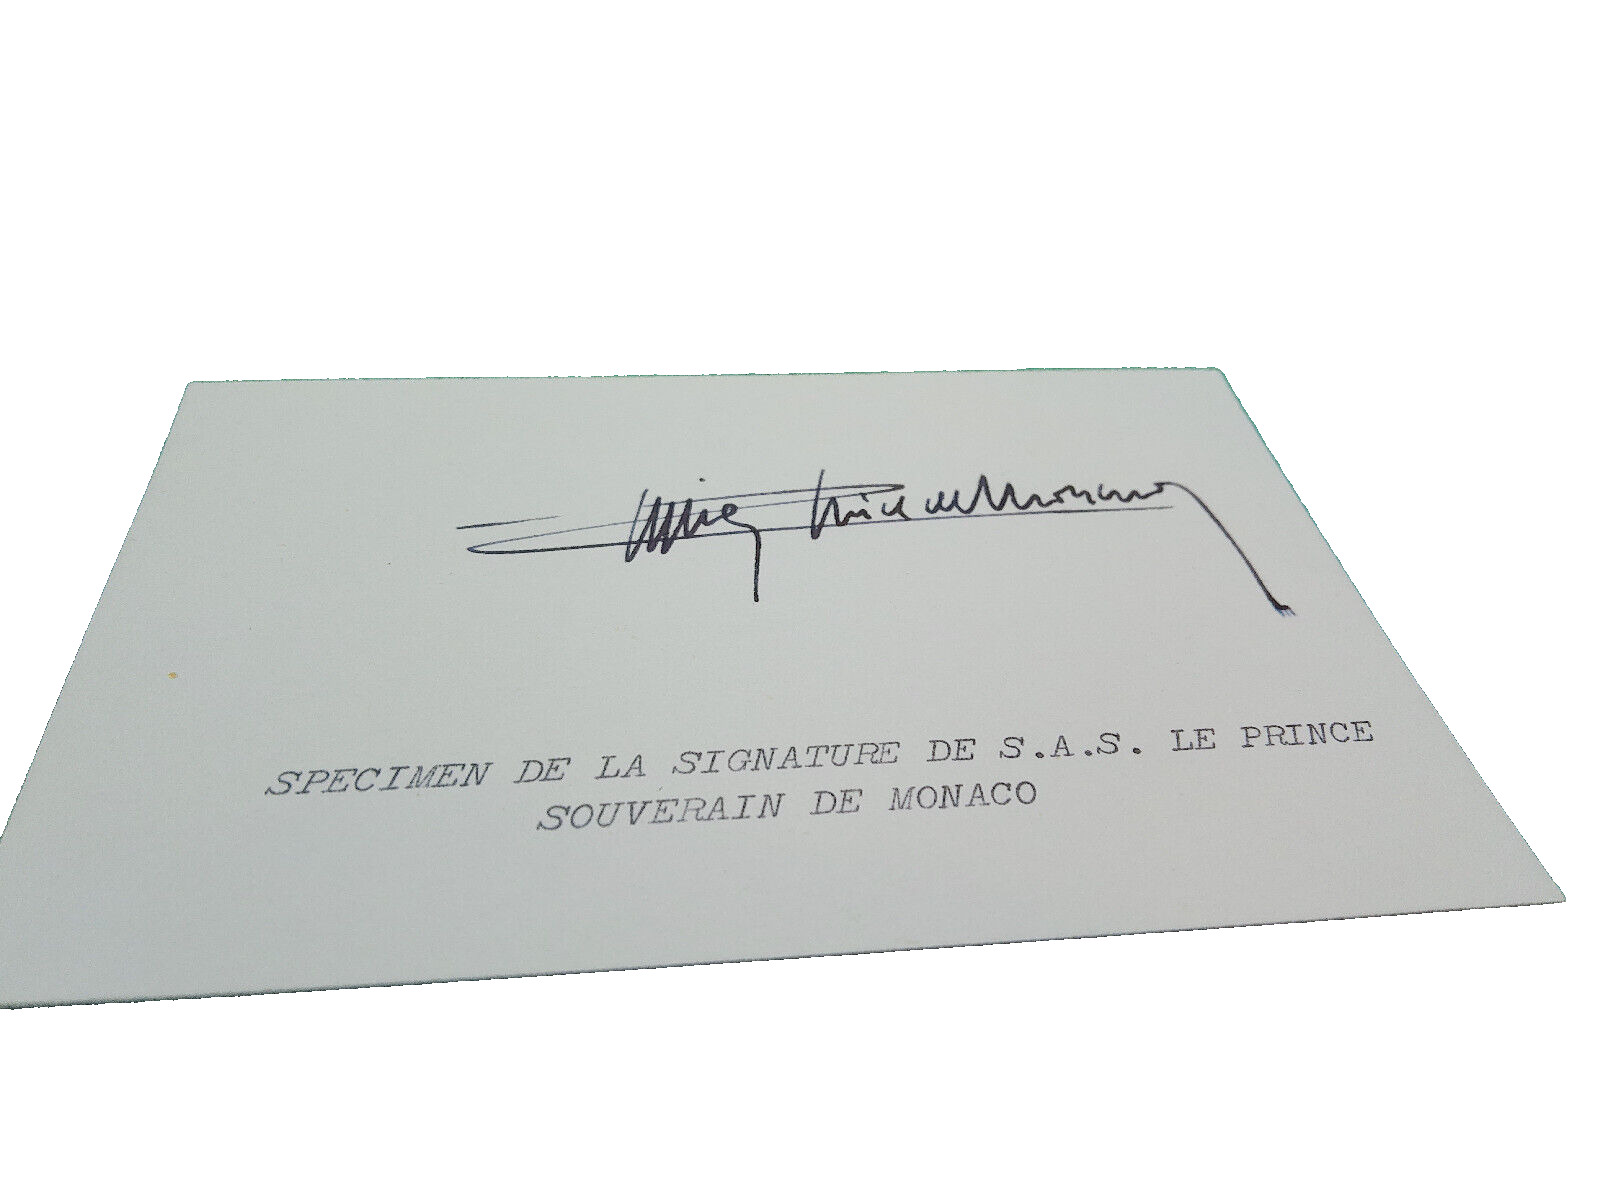 Prince  Rainier III Monaco Grace Kelly husband autograph signed